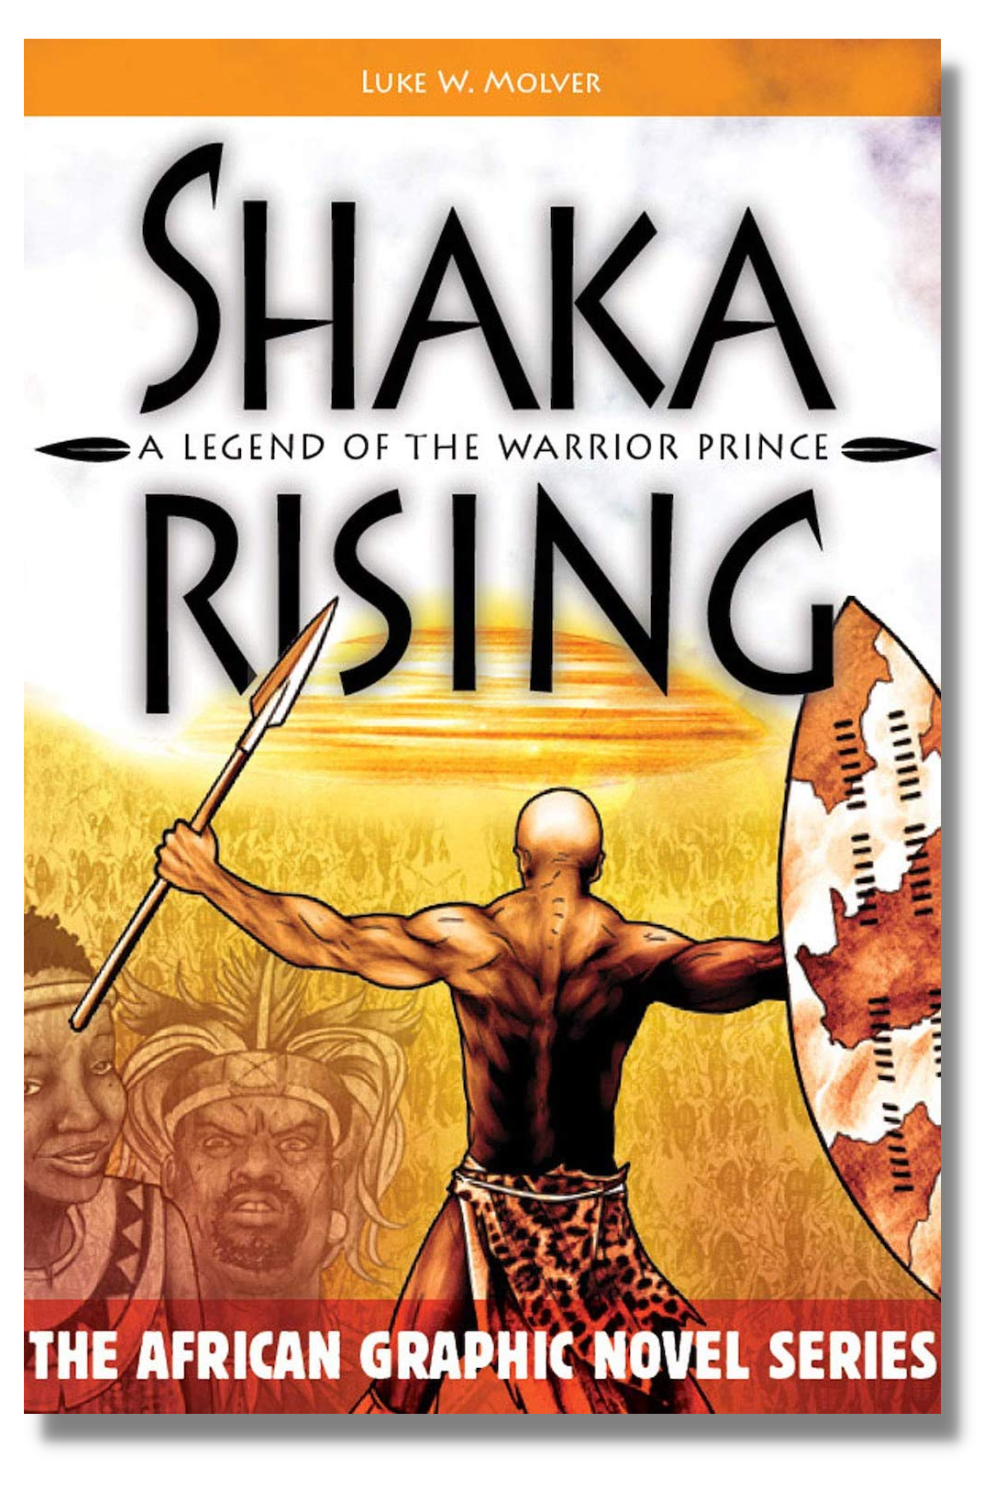 The cover of "Shaka Rising"